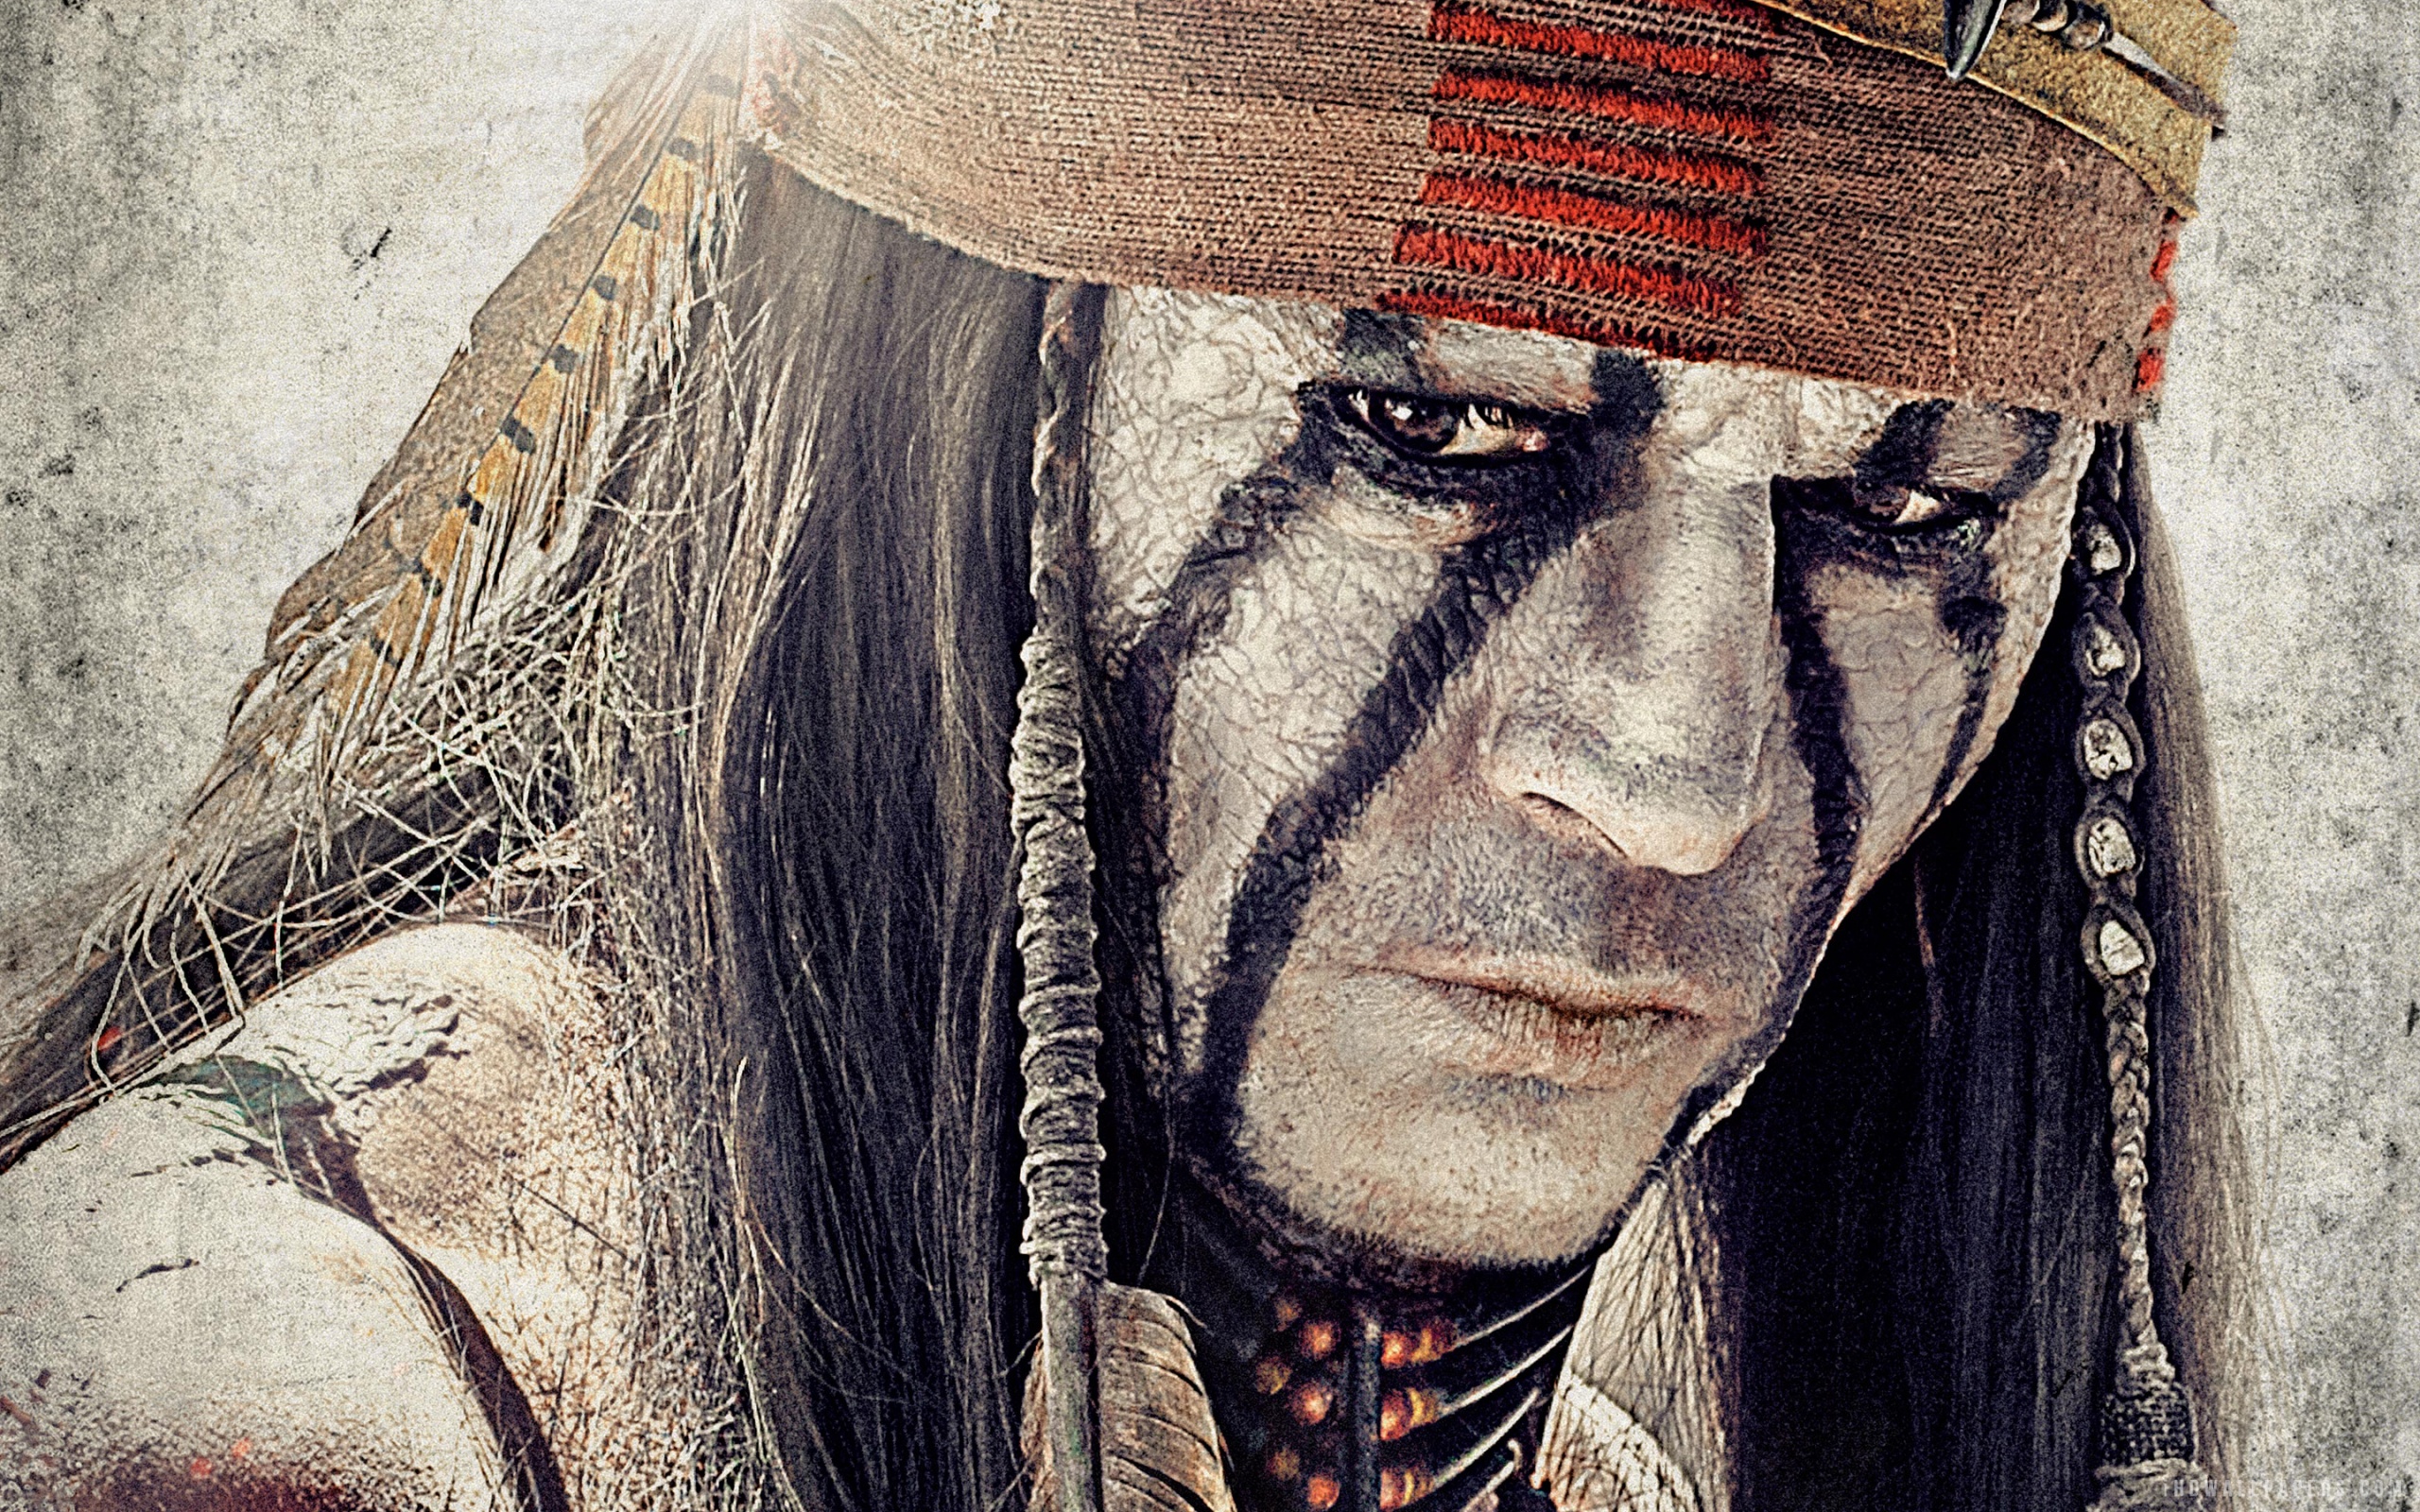 Johnny Depp in The Lone Ranger HD Wallpaper for Desktop 25601600